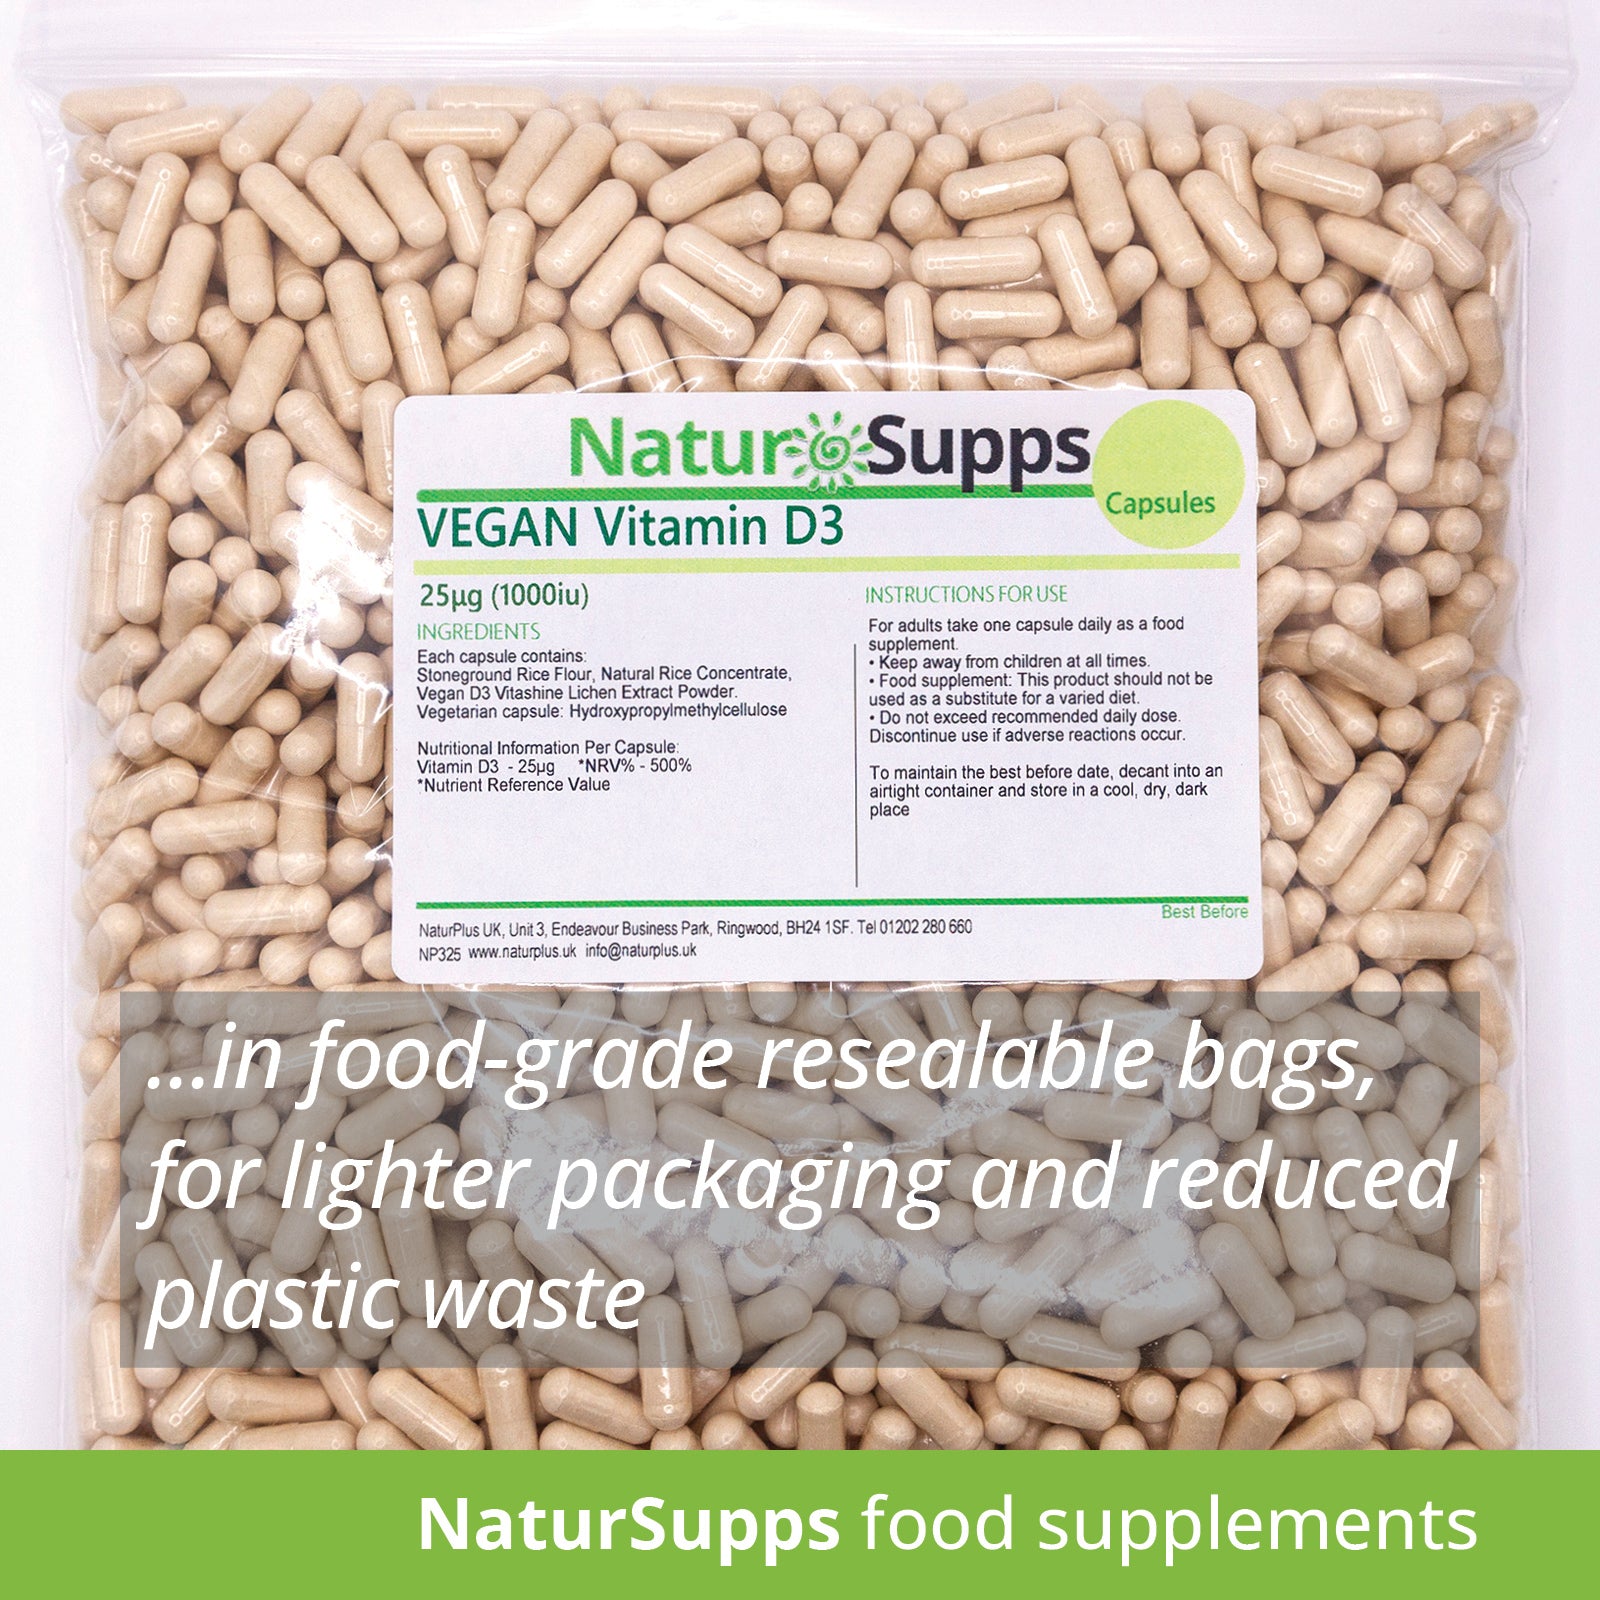 Vitamin D3 1000iu Vegan Capsules - Vitamin D Supplements for Bones, Teeth & Immune System